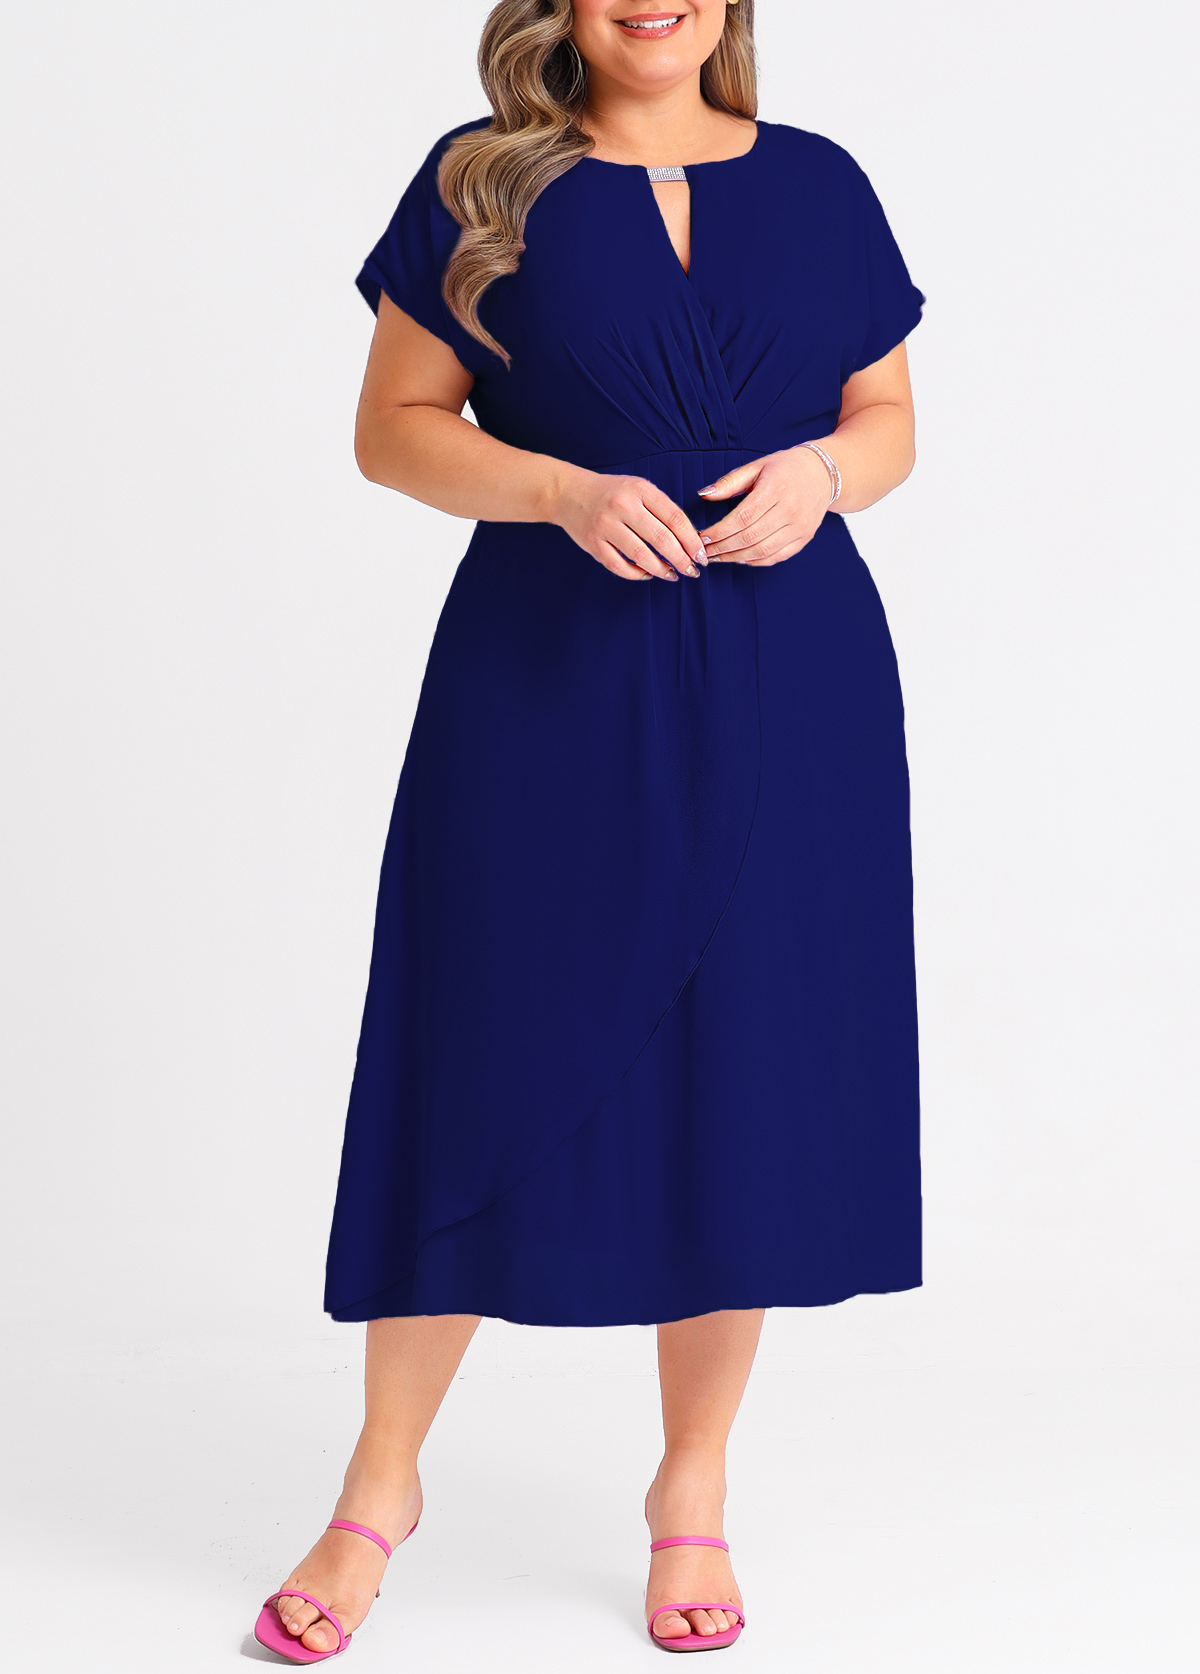 Navy Blue Plus Size Short Sleeve Dress